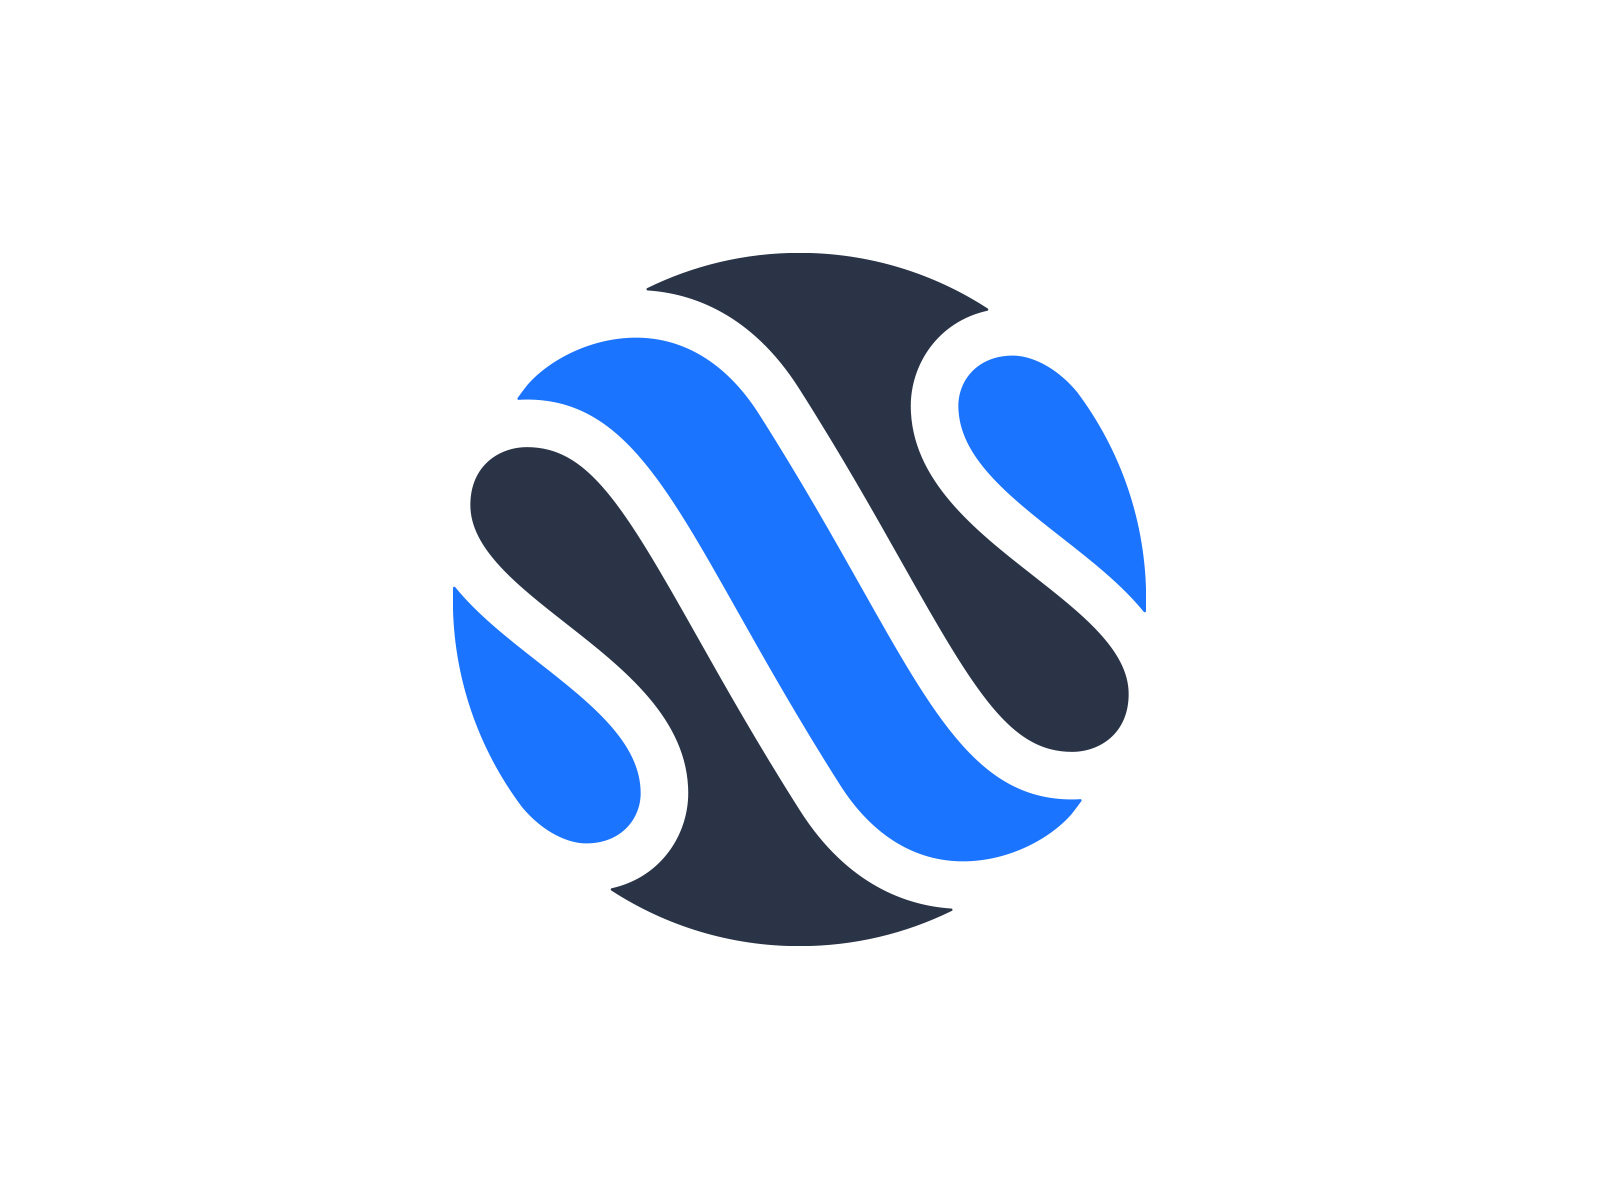 100,000 Blue globe logo Vector Images | Depositphotos